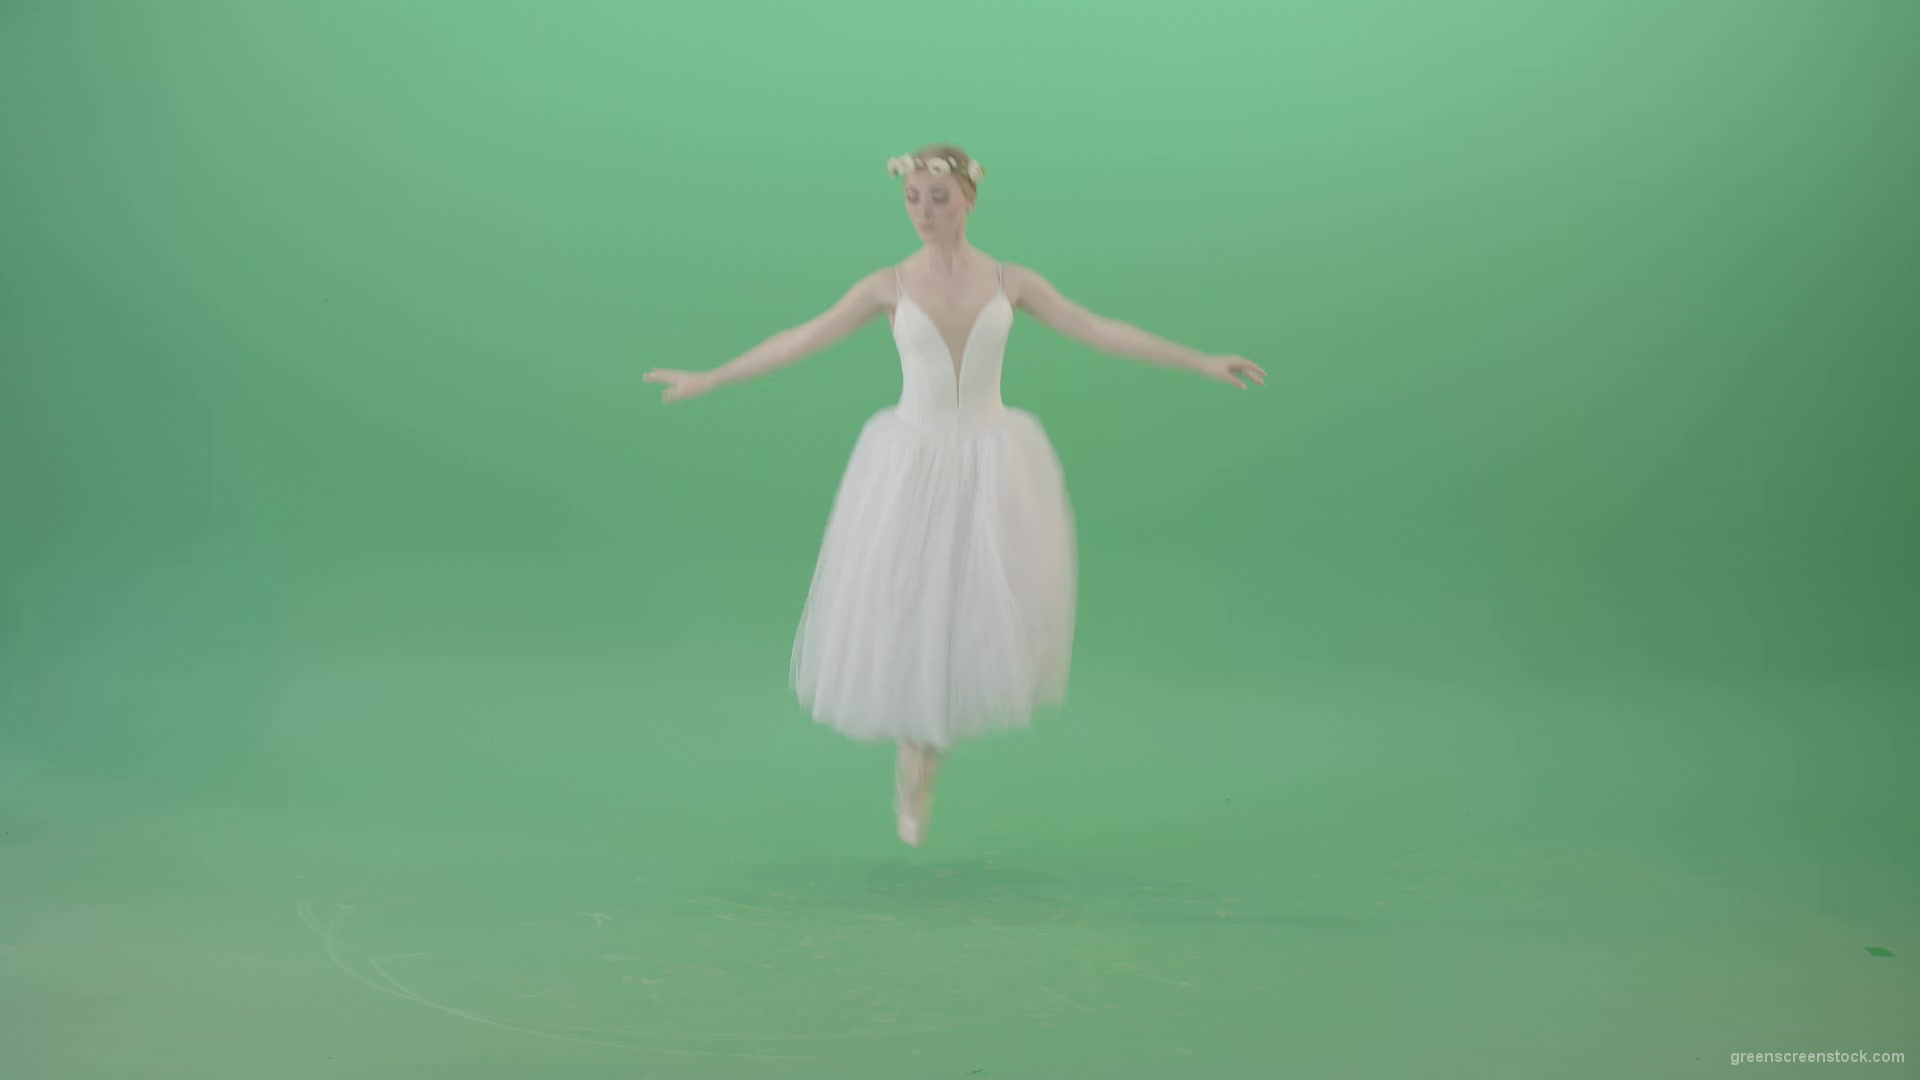 Beautiful-jumping-ballet-dancing-girl-choreograph-jumps-on-green-screen-4K-Video-Footage-1920_004 Green Screen Stock